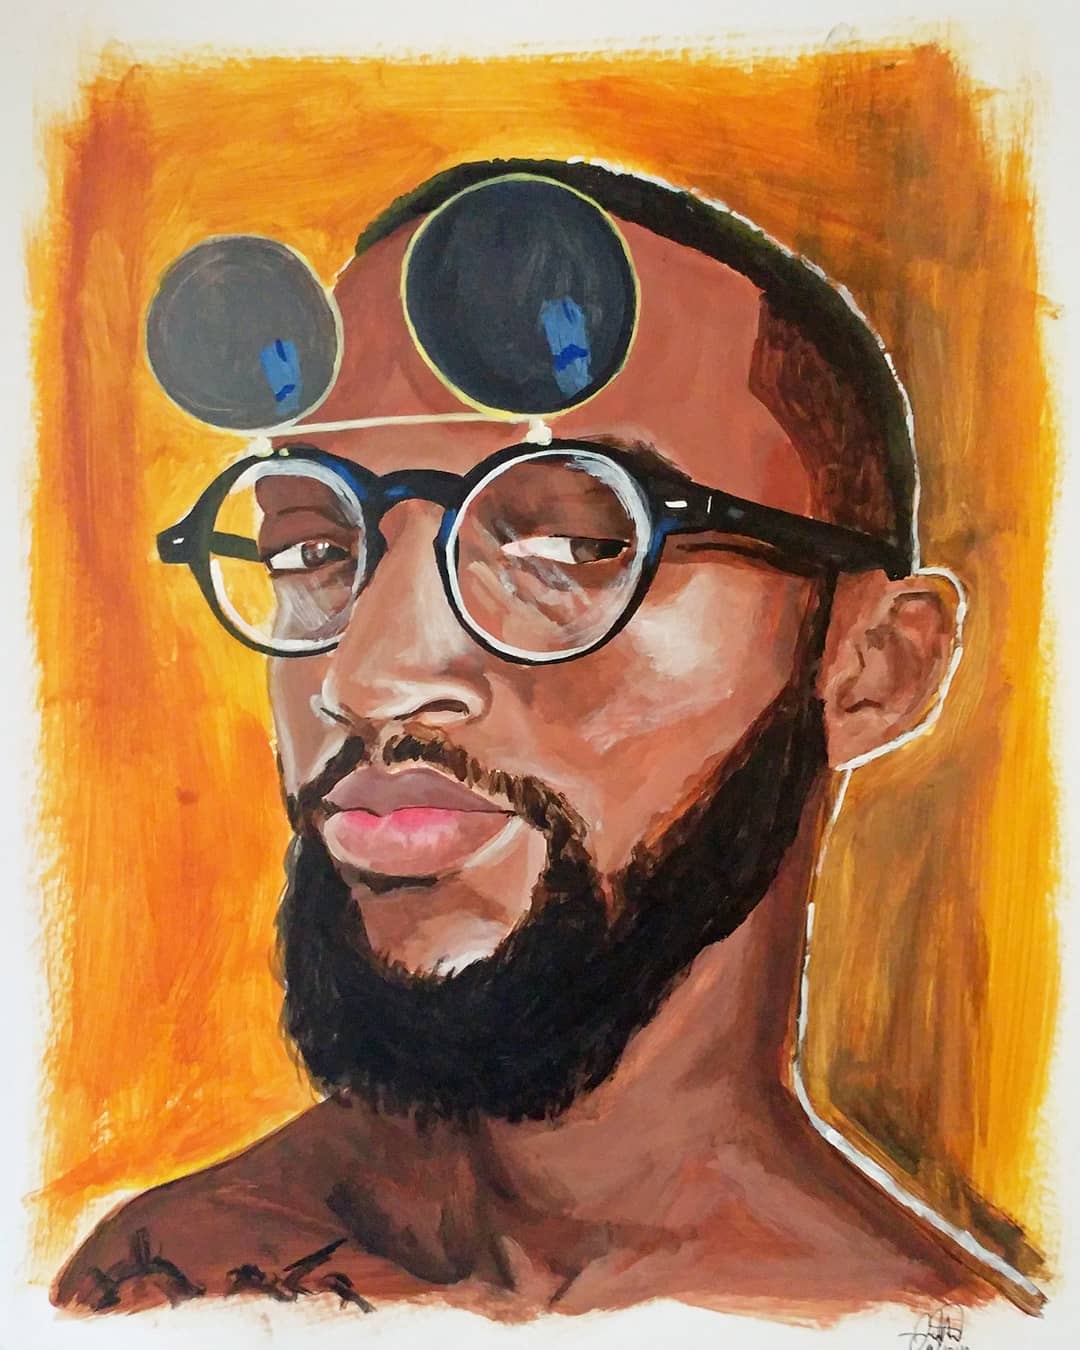 Jordan Hendrickson's self portrait of his head with sunglasses.